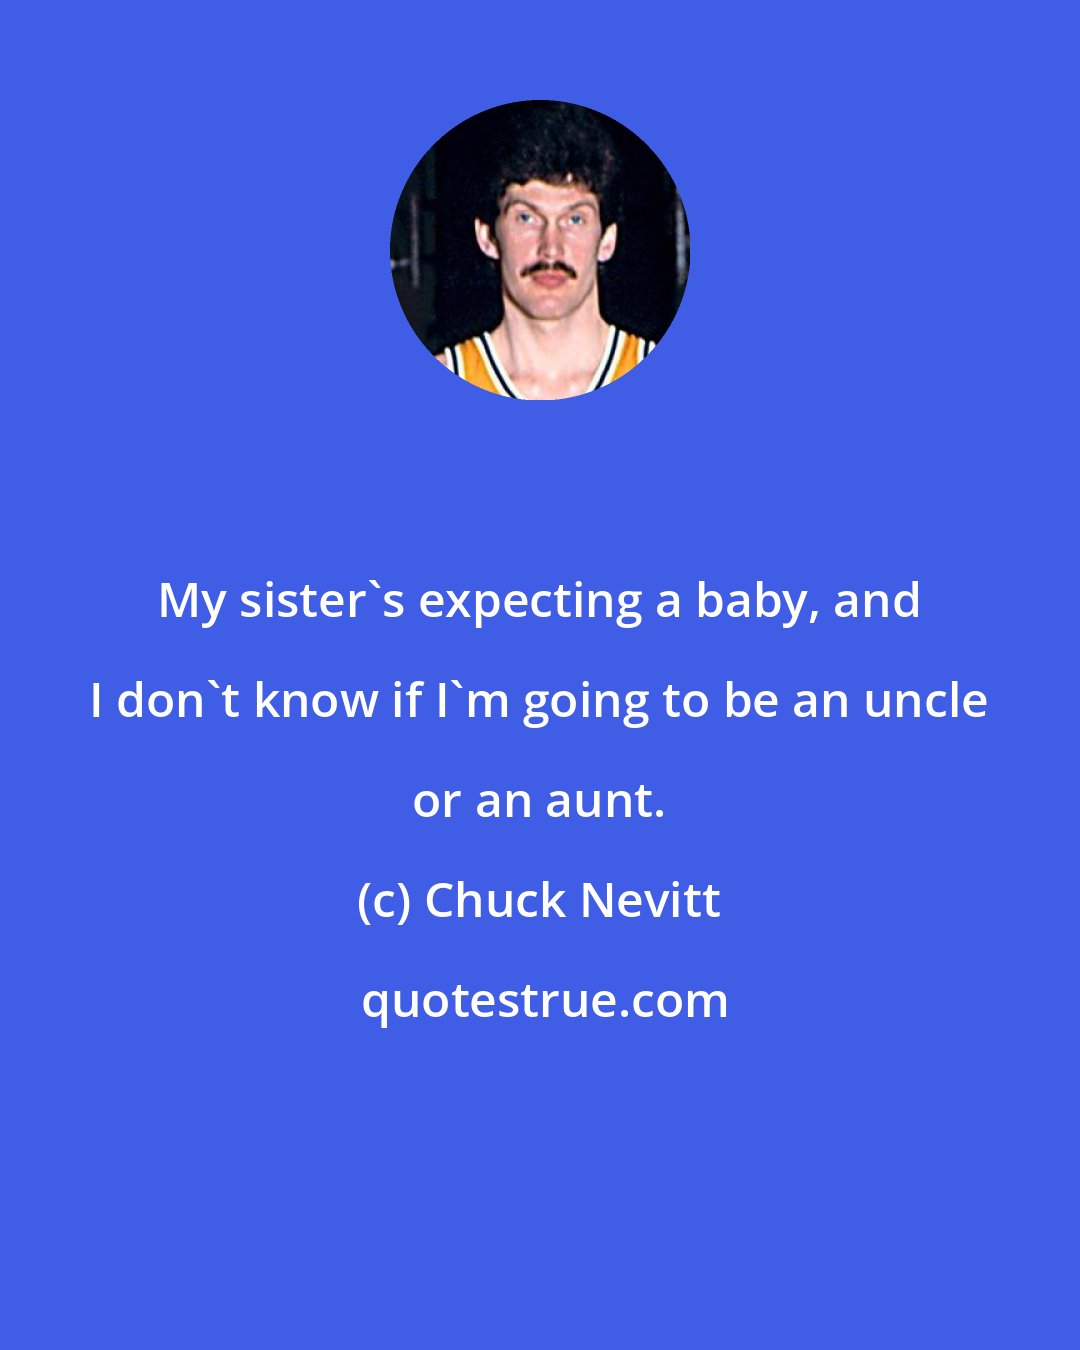 Chuck Nevitt: My sister's expecting a baby, and I don't know if I'm going to be an uncle or an aunt.